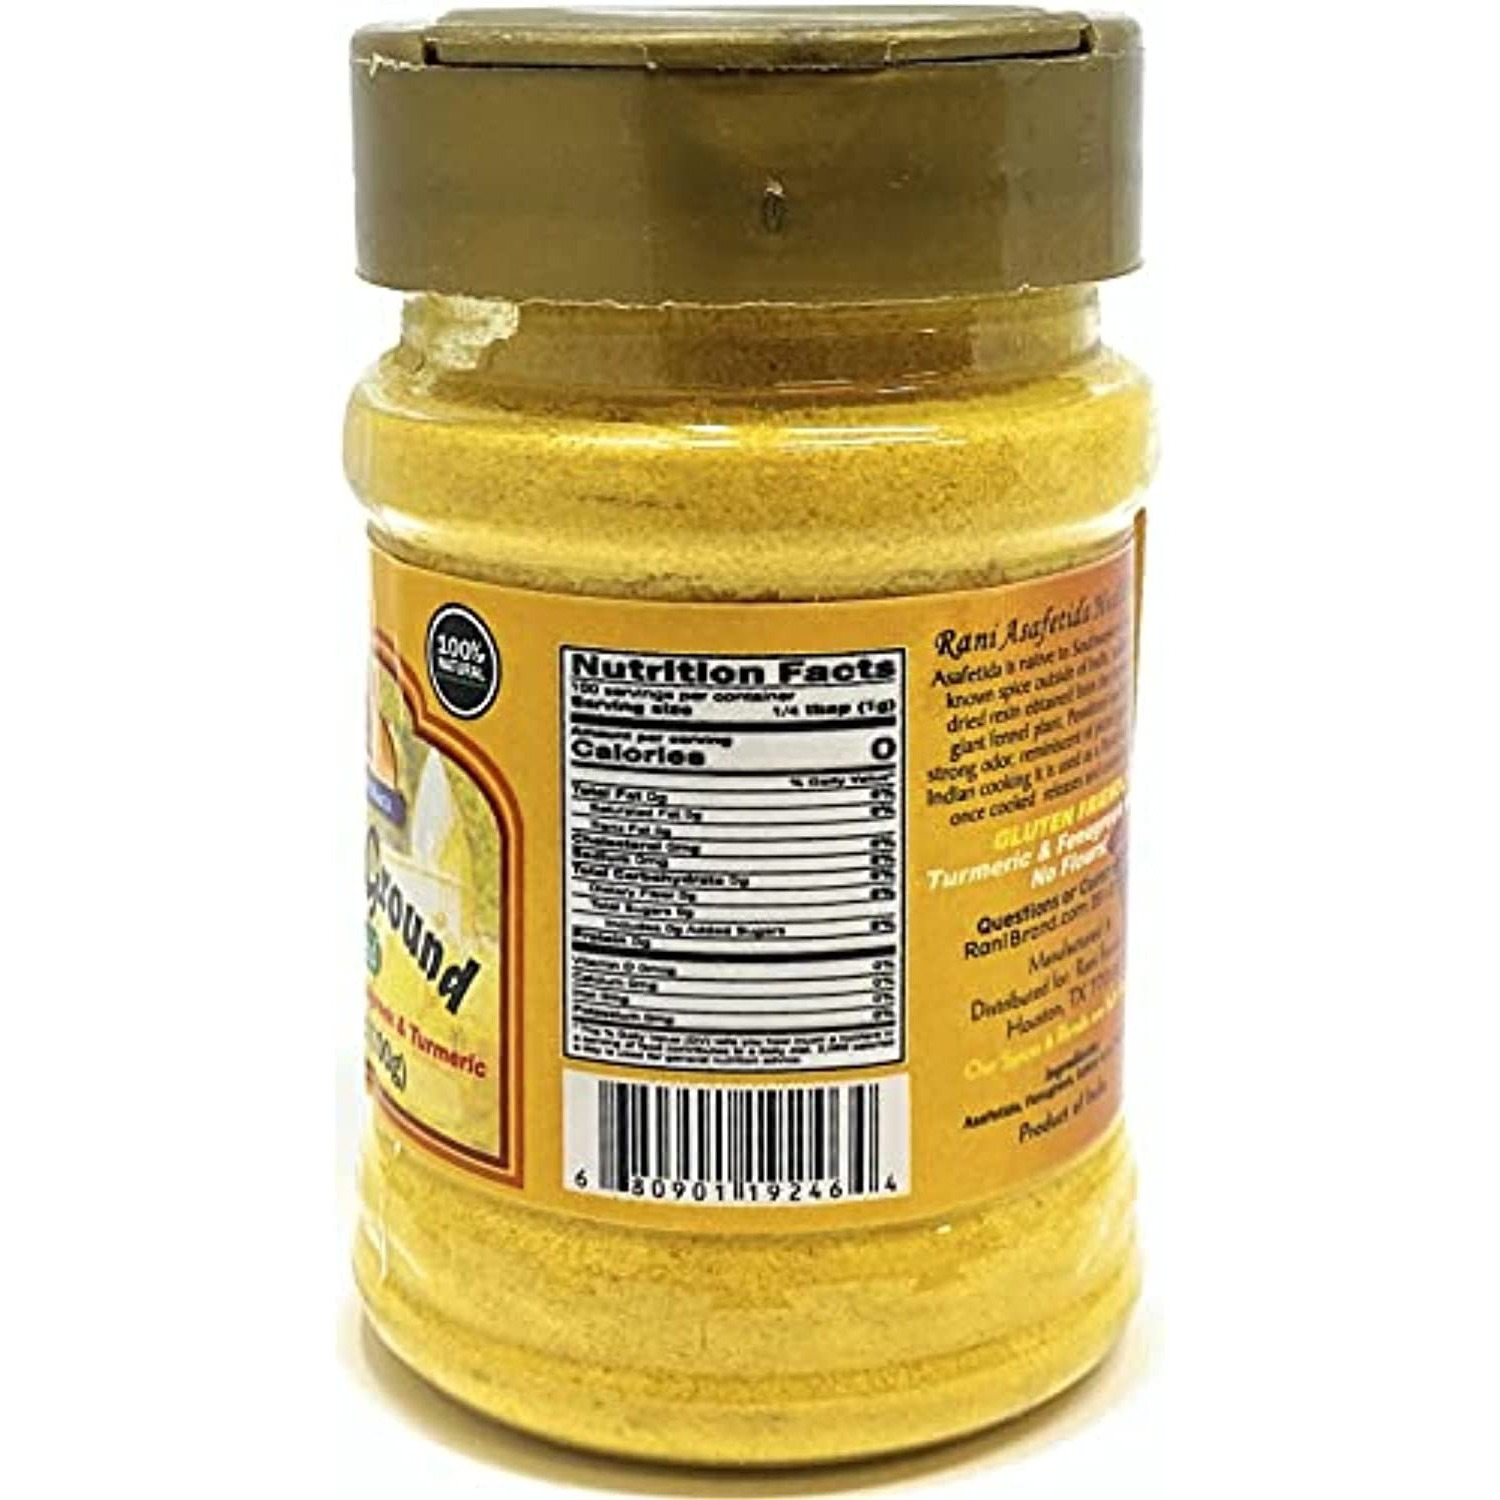 Rani Asafetida (Hing) Ground Health Blend 3.5oz (100g) Gluten Friendly with Fenugreek & Turmeric ~ Natural | Salt Free | Vegan | NON-GMO | Asafoetida Indian Spice | Best for Onion Garlic Substitute